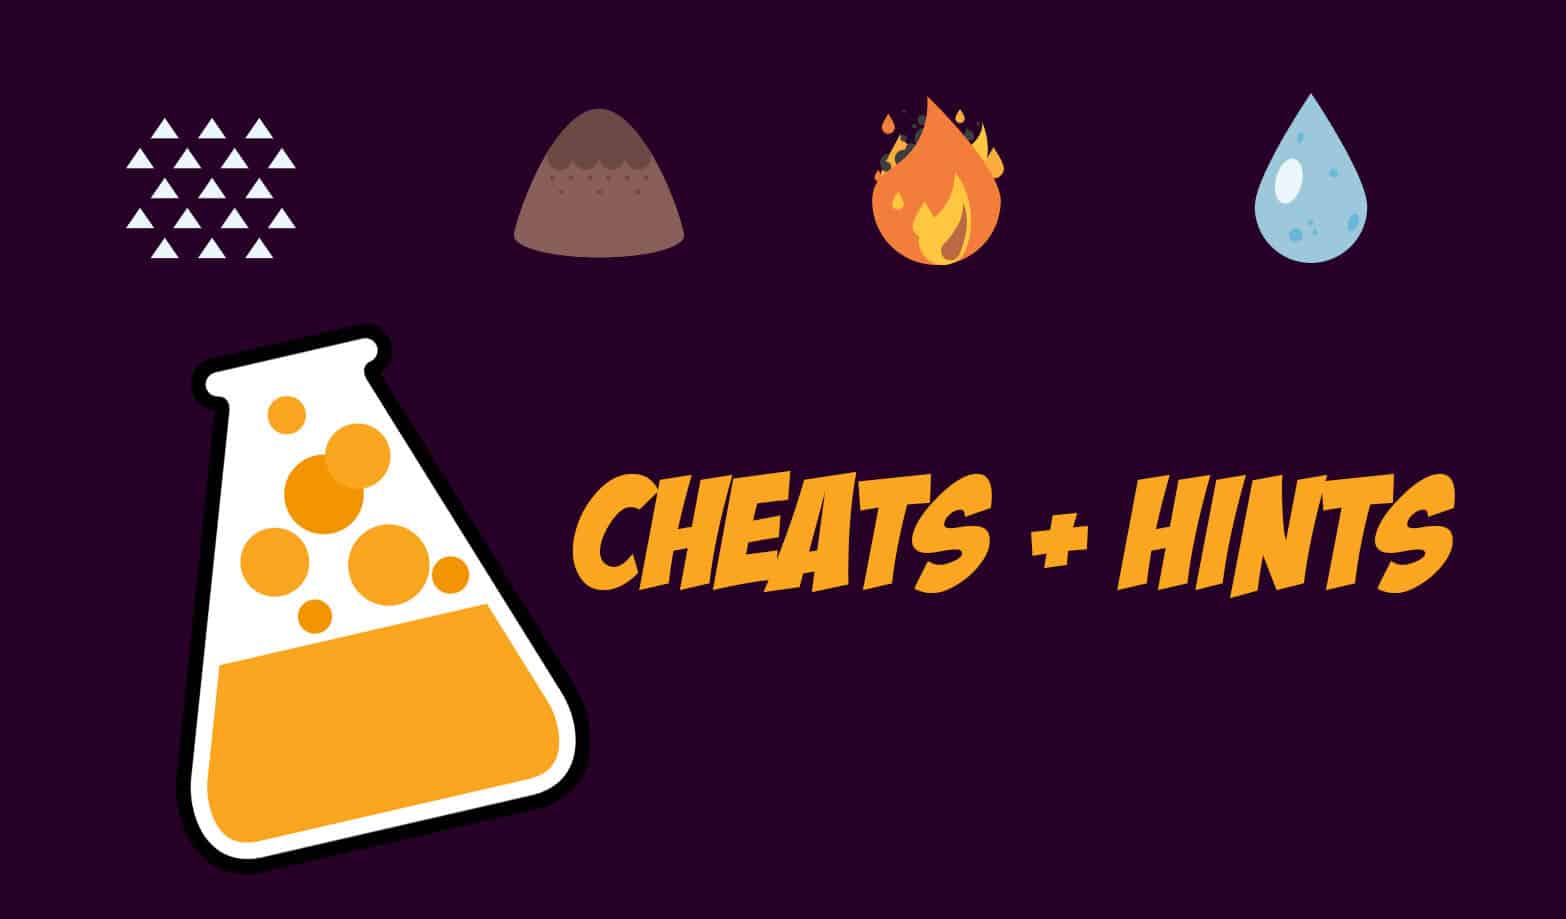 little alchemy 2 game cheat sheet